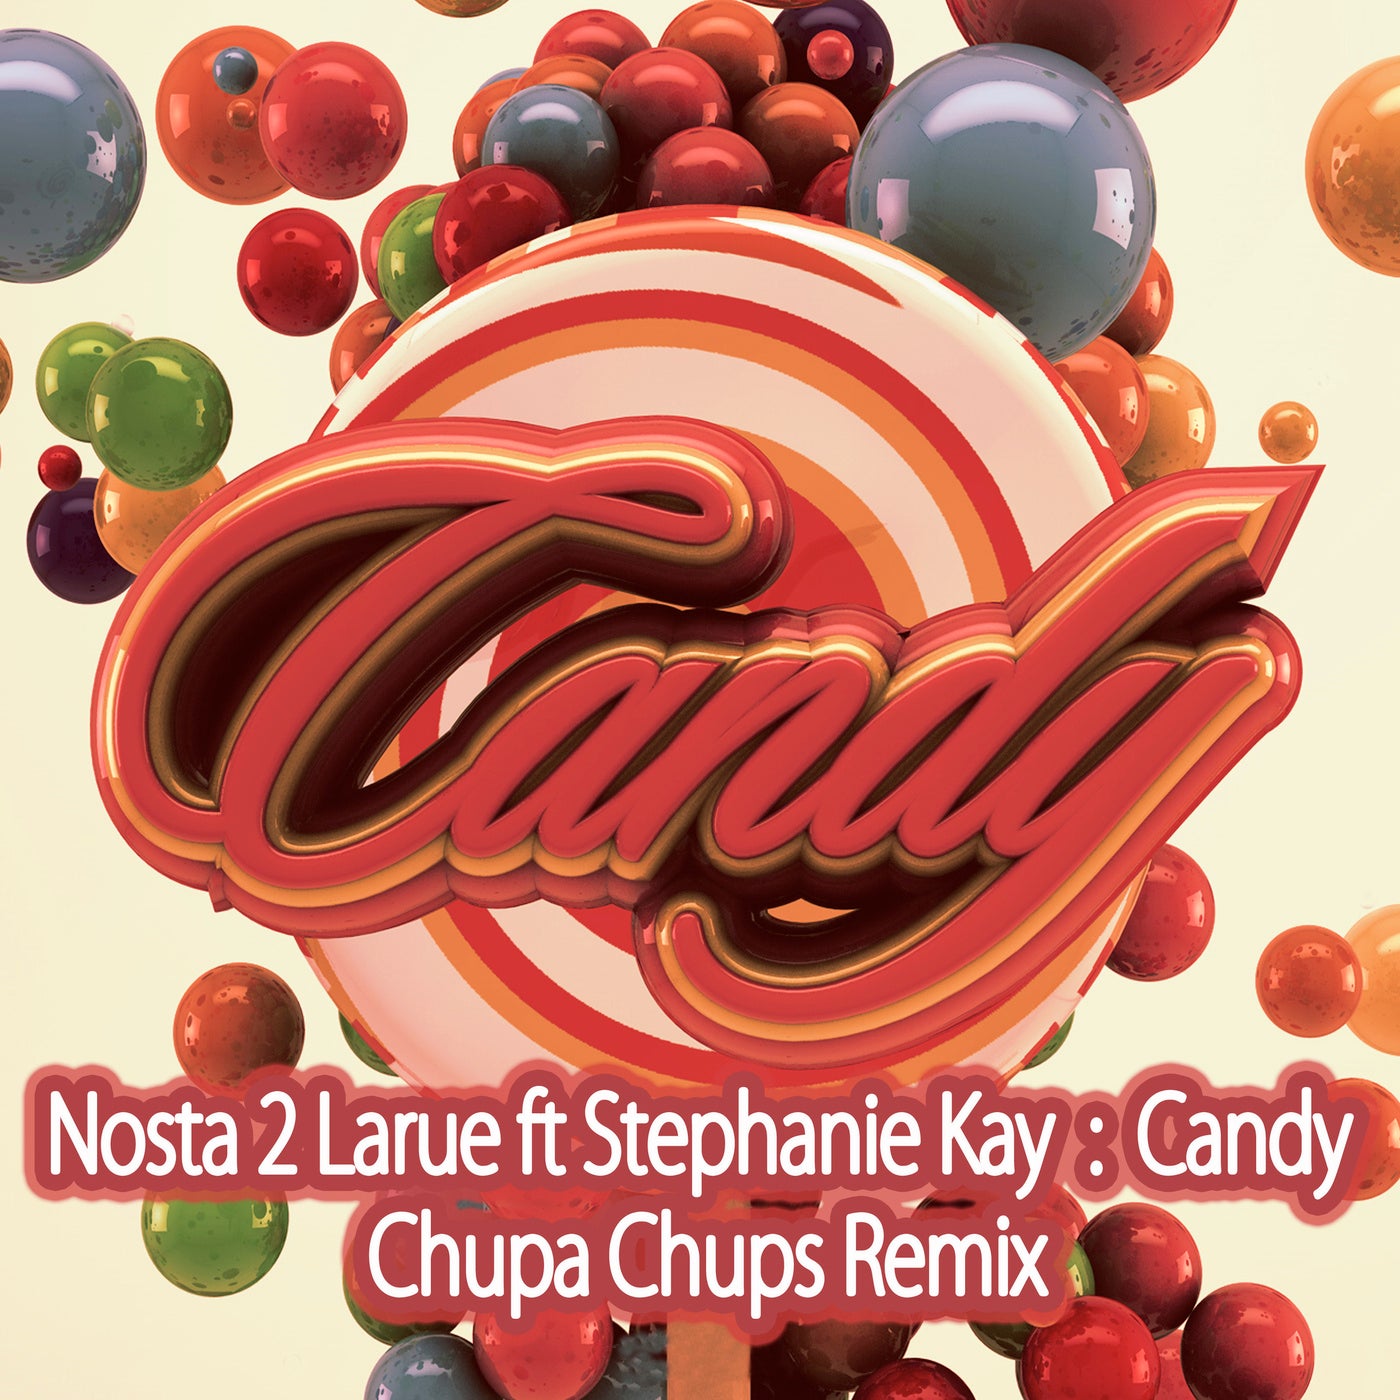 Candy (Chupa Chups Remix)